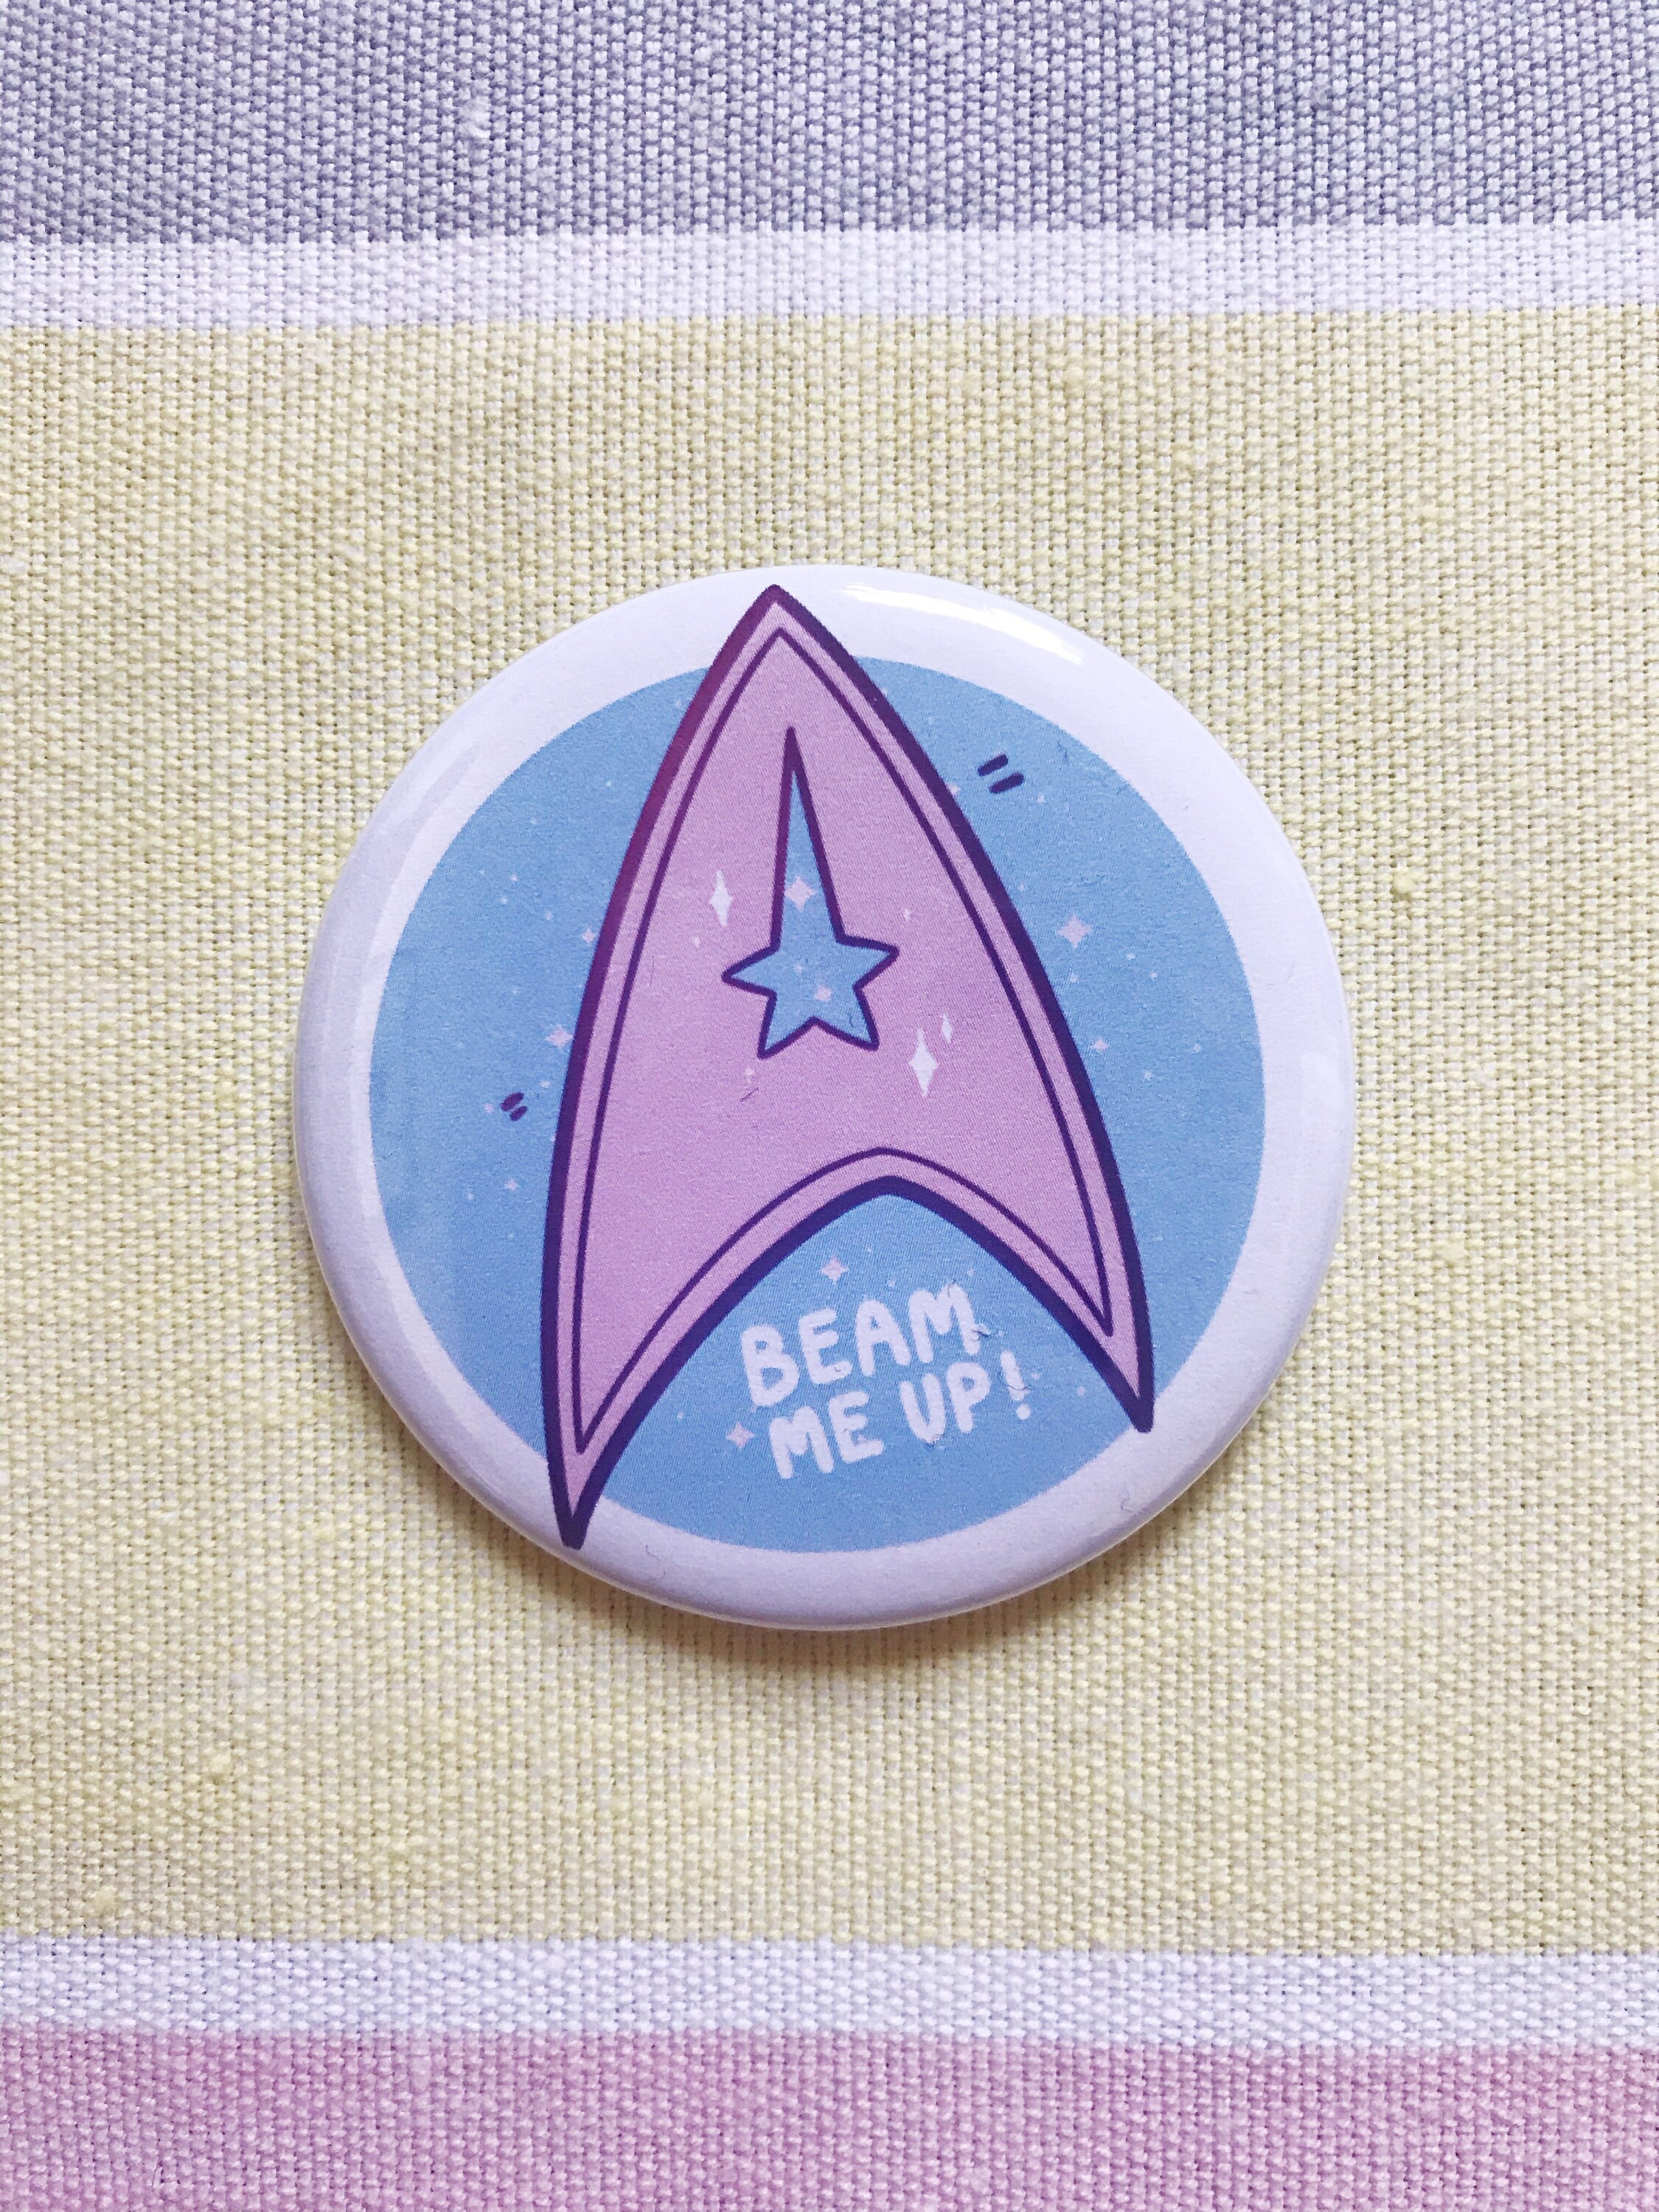 Star Trek The Next Generation Commander Riker Pin Lapel Badge Toy Retro Vintage 